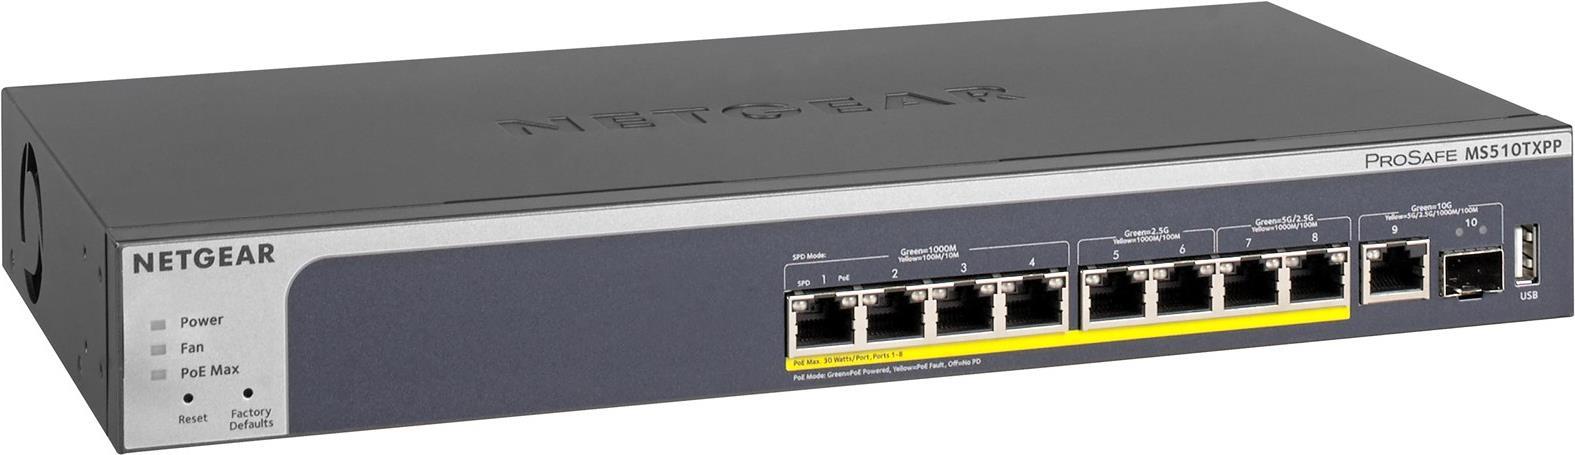 Netgear 10-P.MULTI GB POE+ SMART SWITC 8-Port PoE+ Multi-Gigabit Smart Managed Pro Switch mit 2 10G Kupfer/Fiber Uplinks, 180W PoE Budget, aufgegliedert in 2-Port RJ-45 Multi-GB Eth IEEE 802.3bz (NBASE-T) 100M/1G/2.5G/5G with PoE+ (MS510TXPP-100EUS)